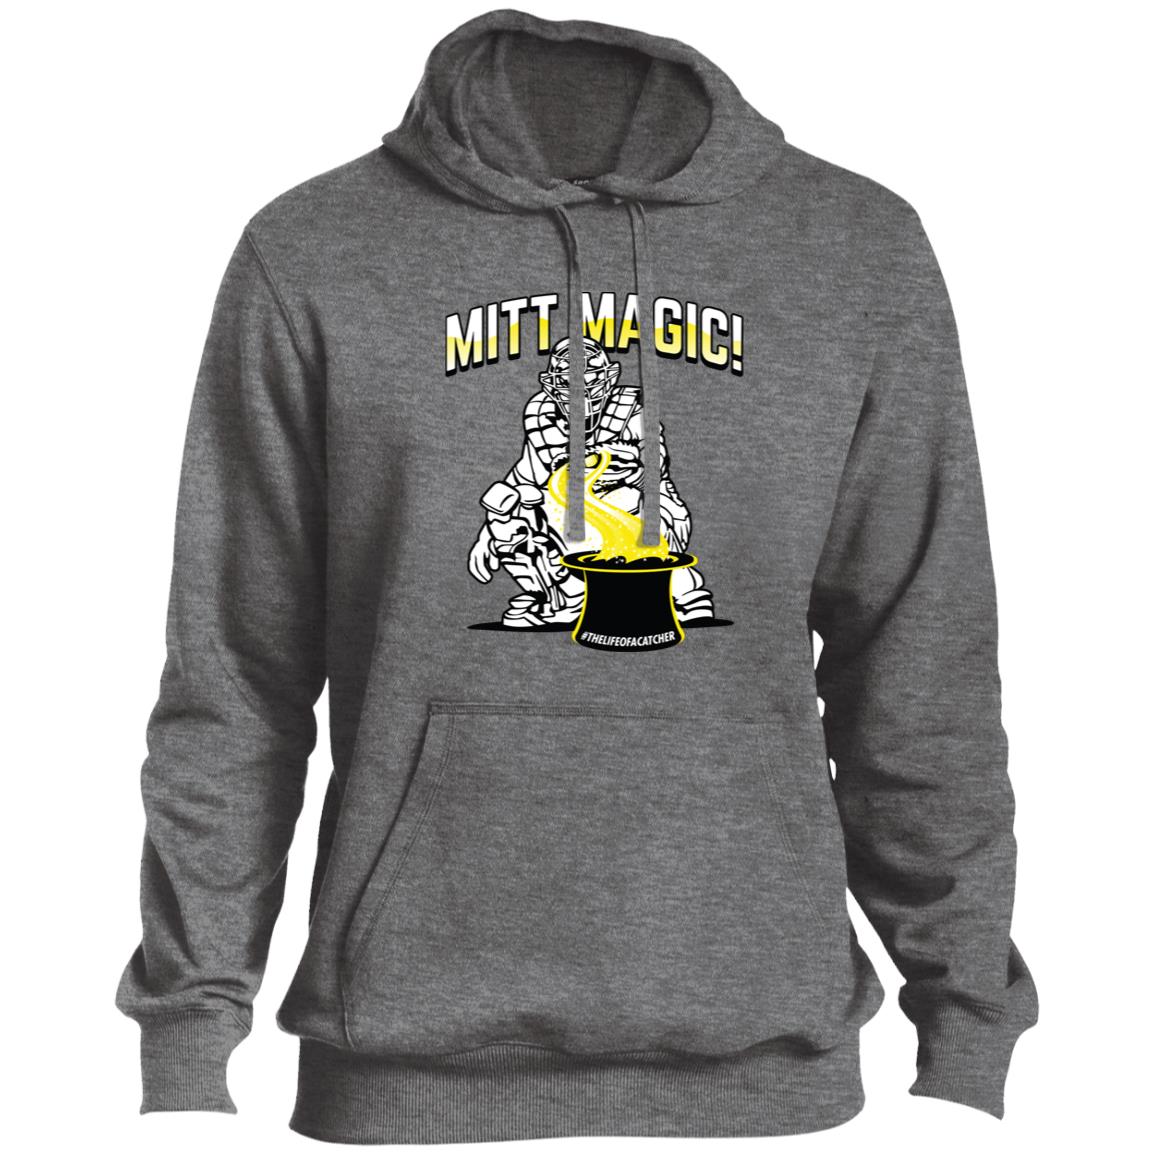 The Catching Guy Mitt Magic Pullover Hoodie grey